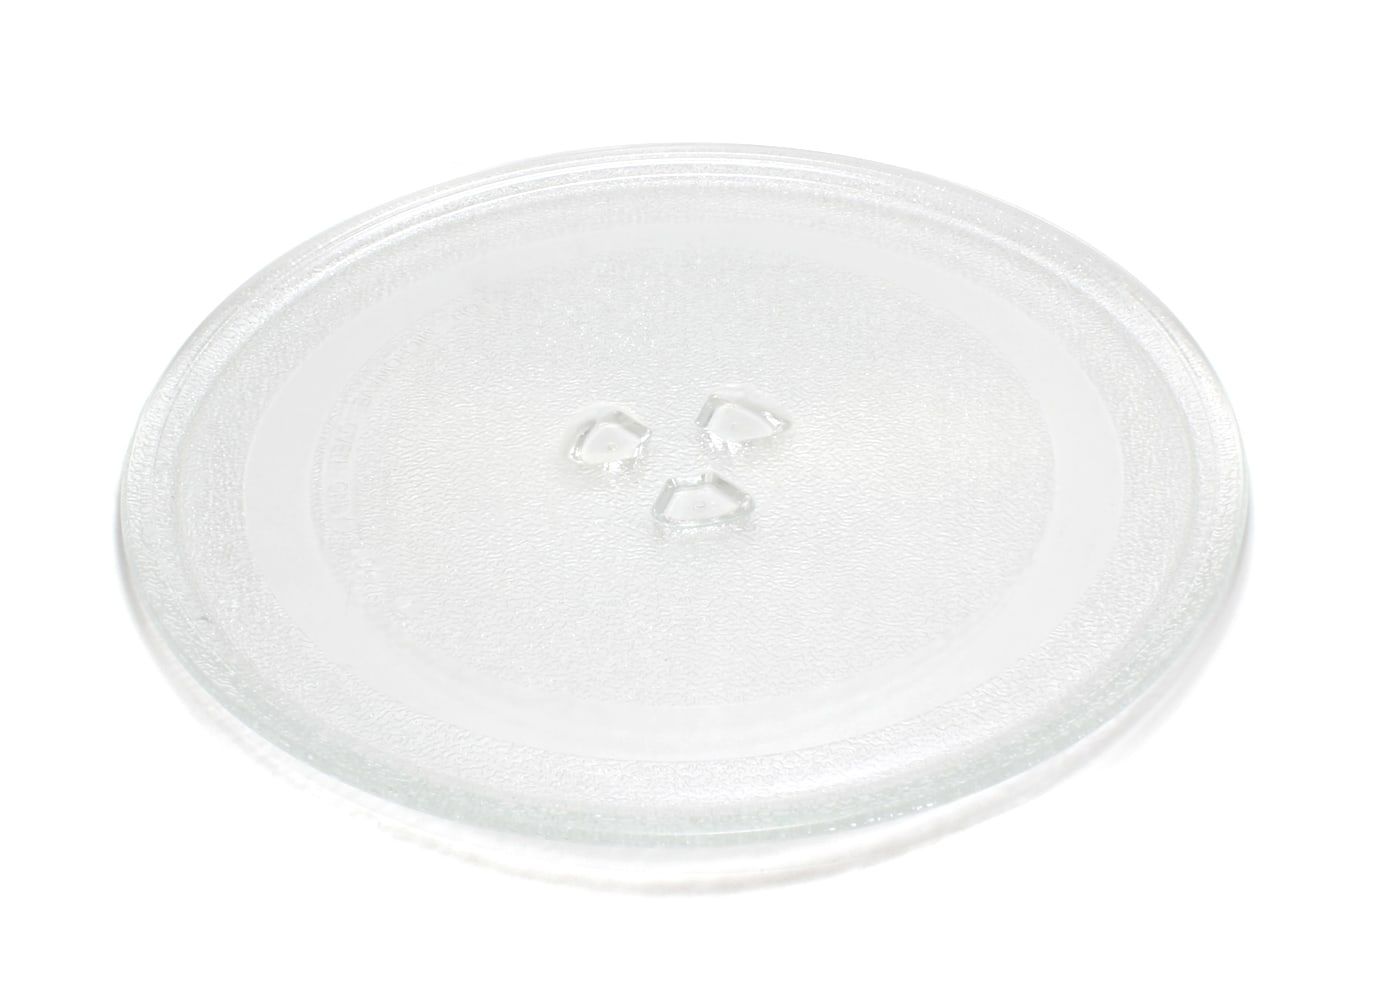 Тарелка для микроволновой печи Helpico 49PM005, MCW011UN тарелка для свч микроволновой печи ekparts kor 610 s